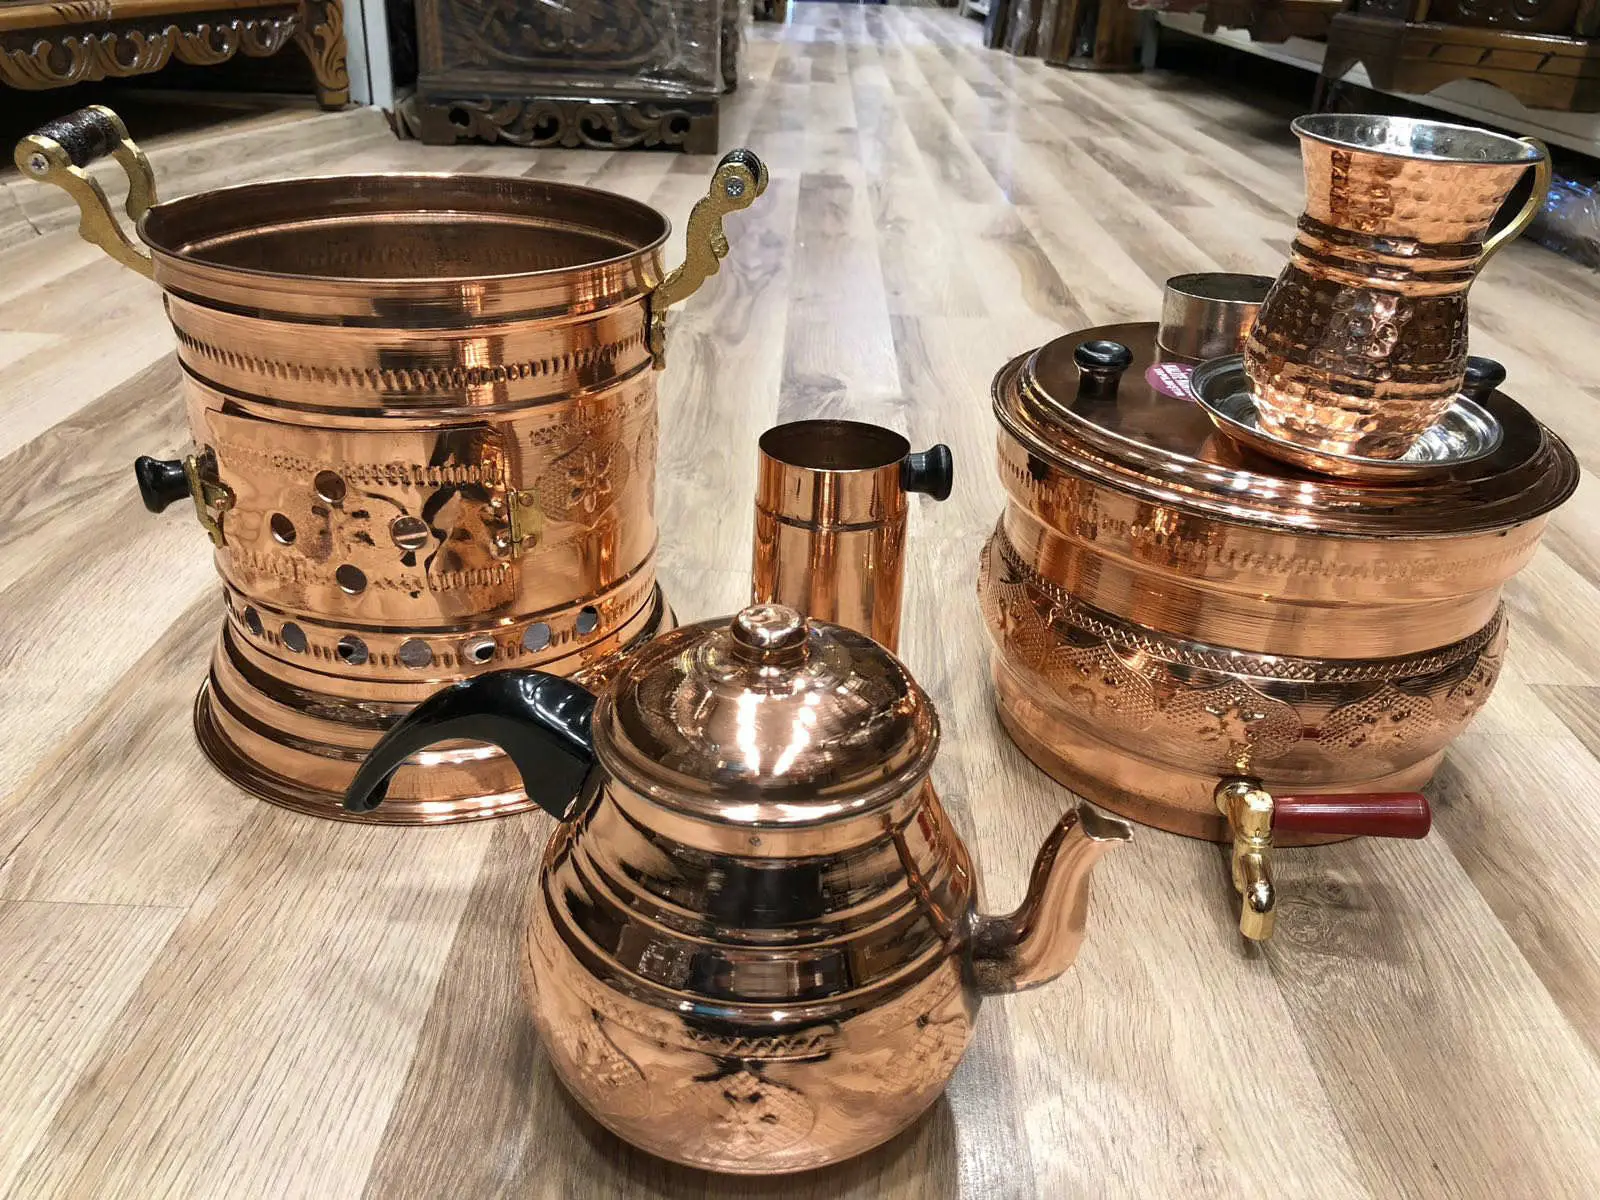 https://ae01.alicdn.com/kf/Ub6f701f4ea5f42b3a7ff26410bb3cbcfk/Copper-Handcraft-Wood-Burning-Charcoal-Samovar-Handmade-Teapot-Samovar-Tea-Brewing-Kettle.jpeg